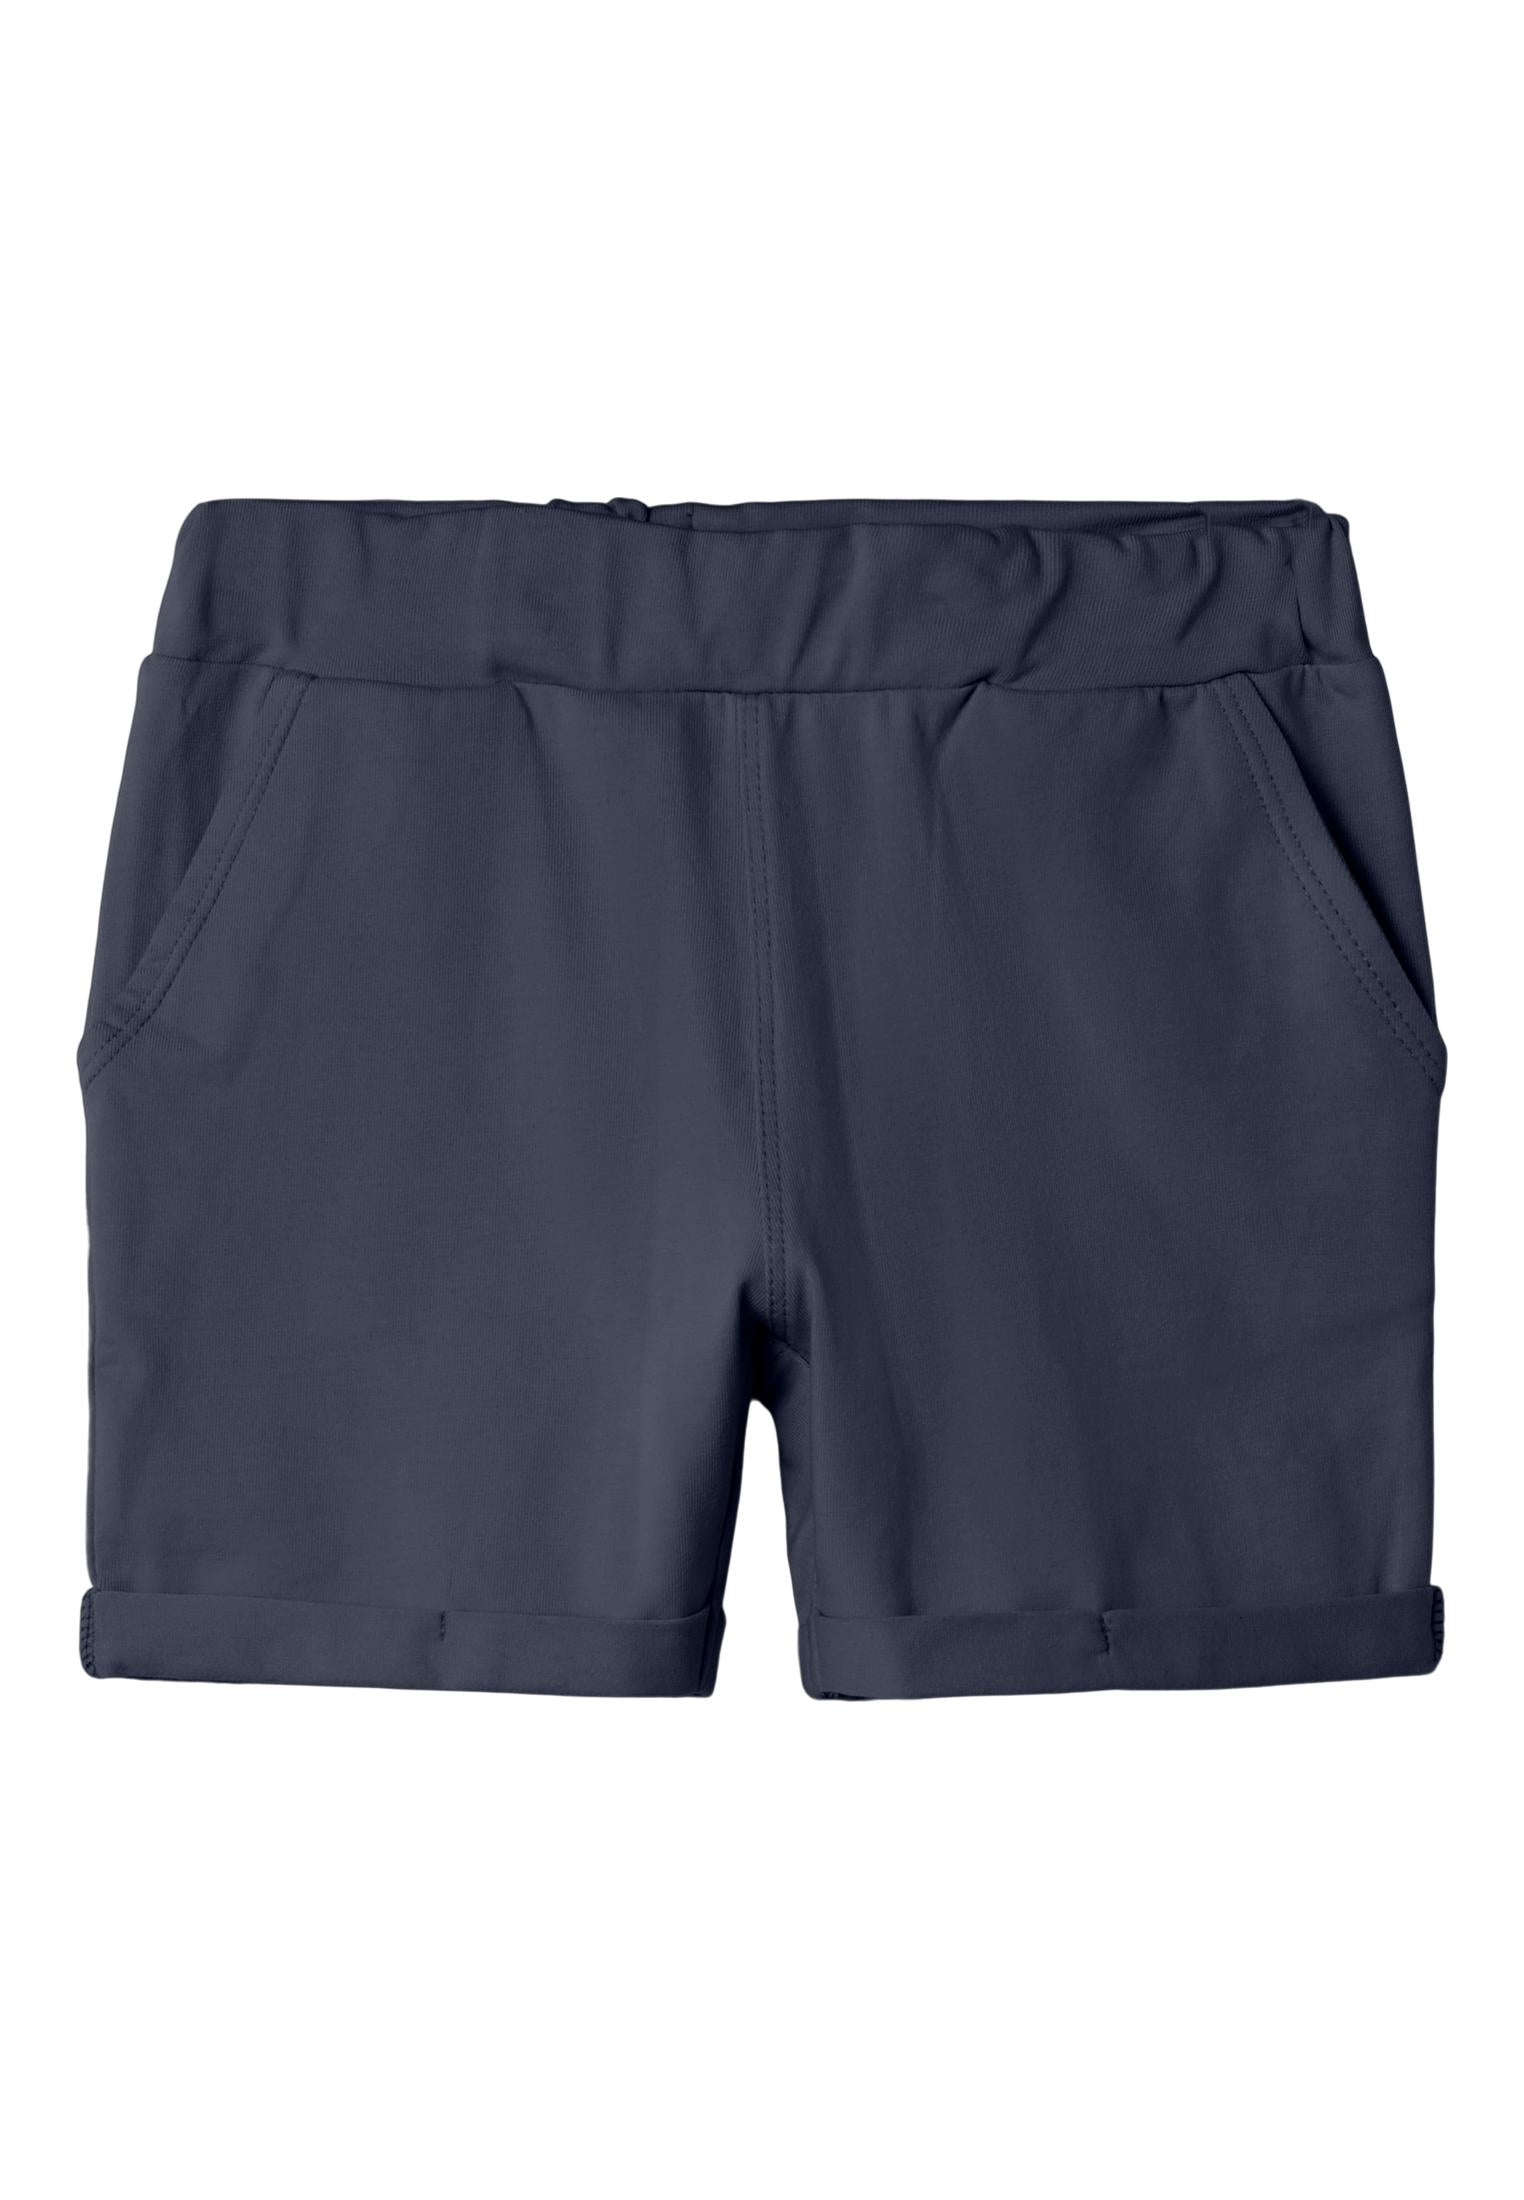 Viking Long Shorts - Dark Sapphire Front View